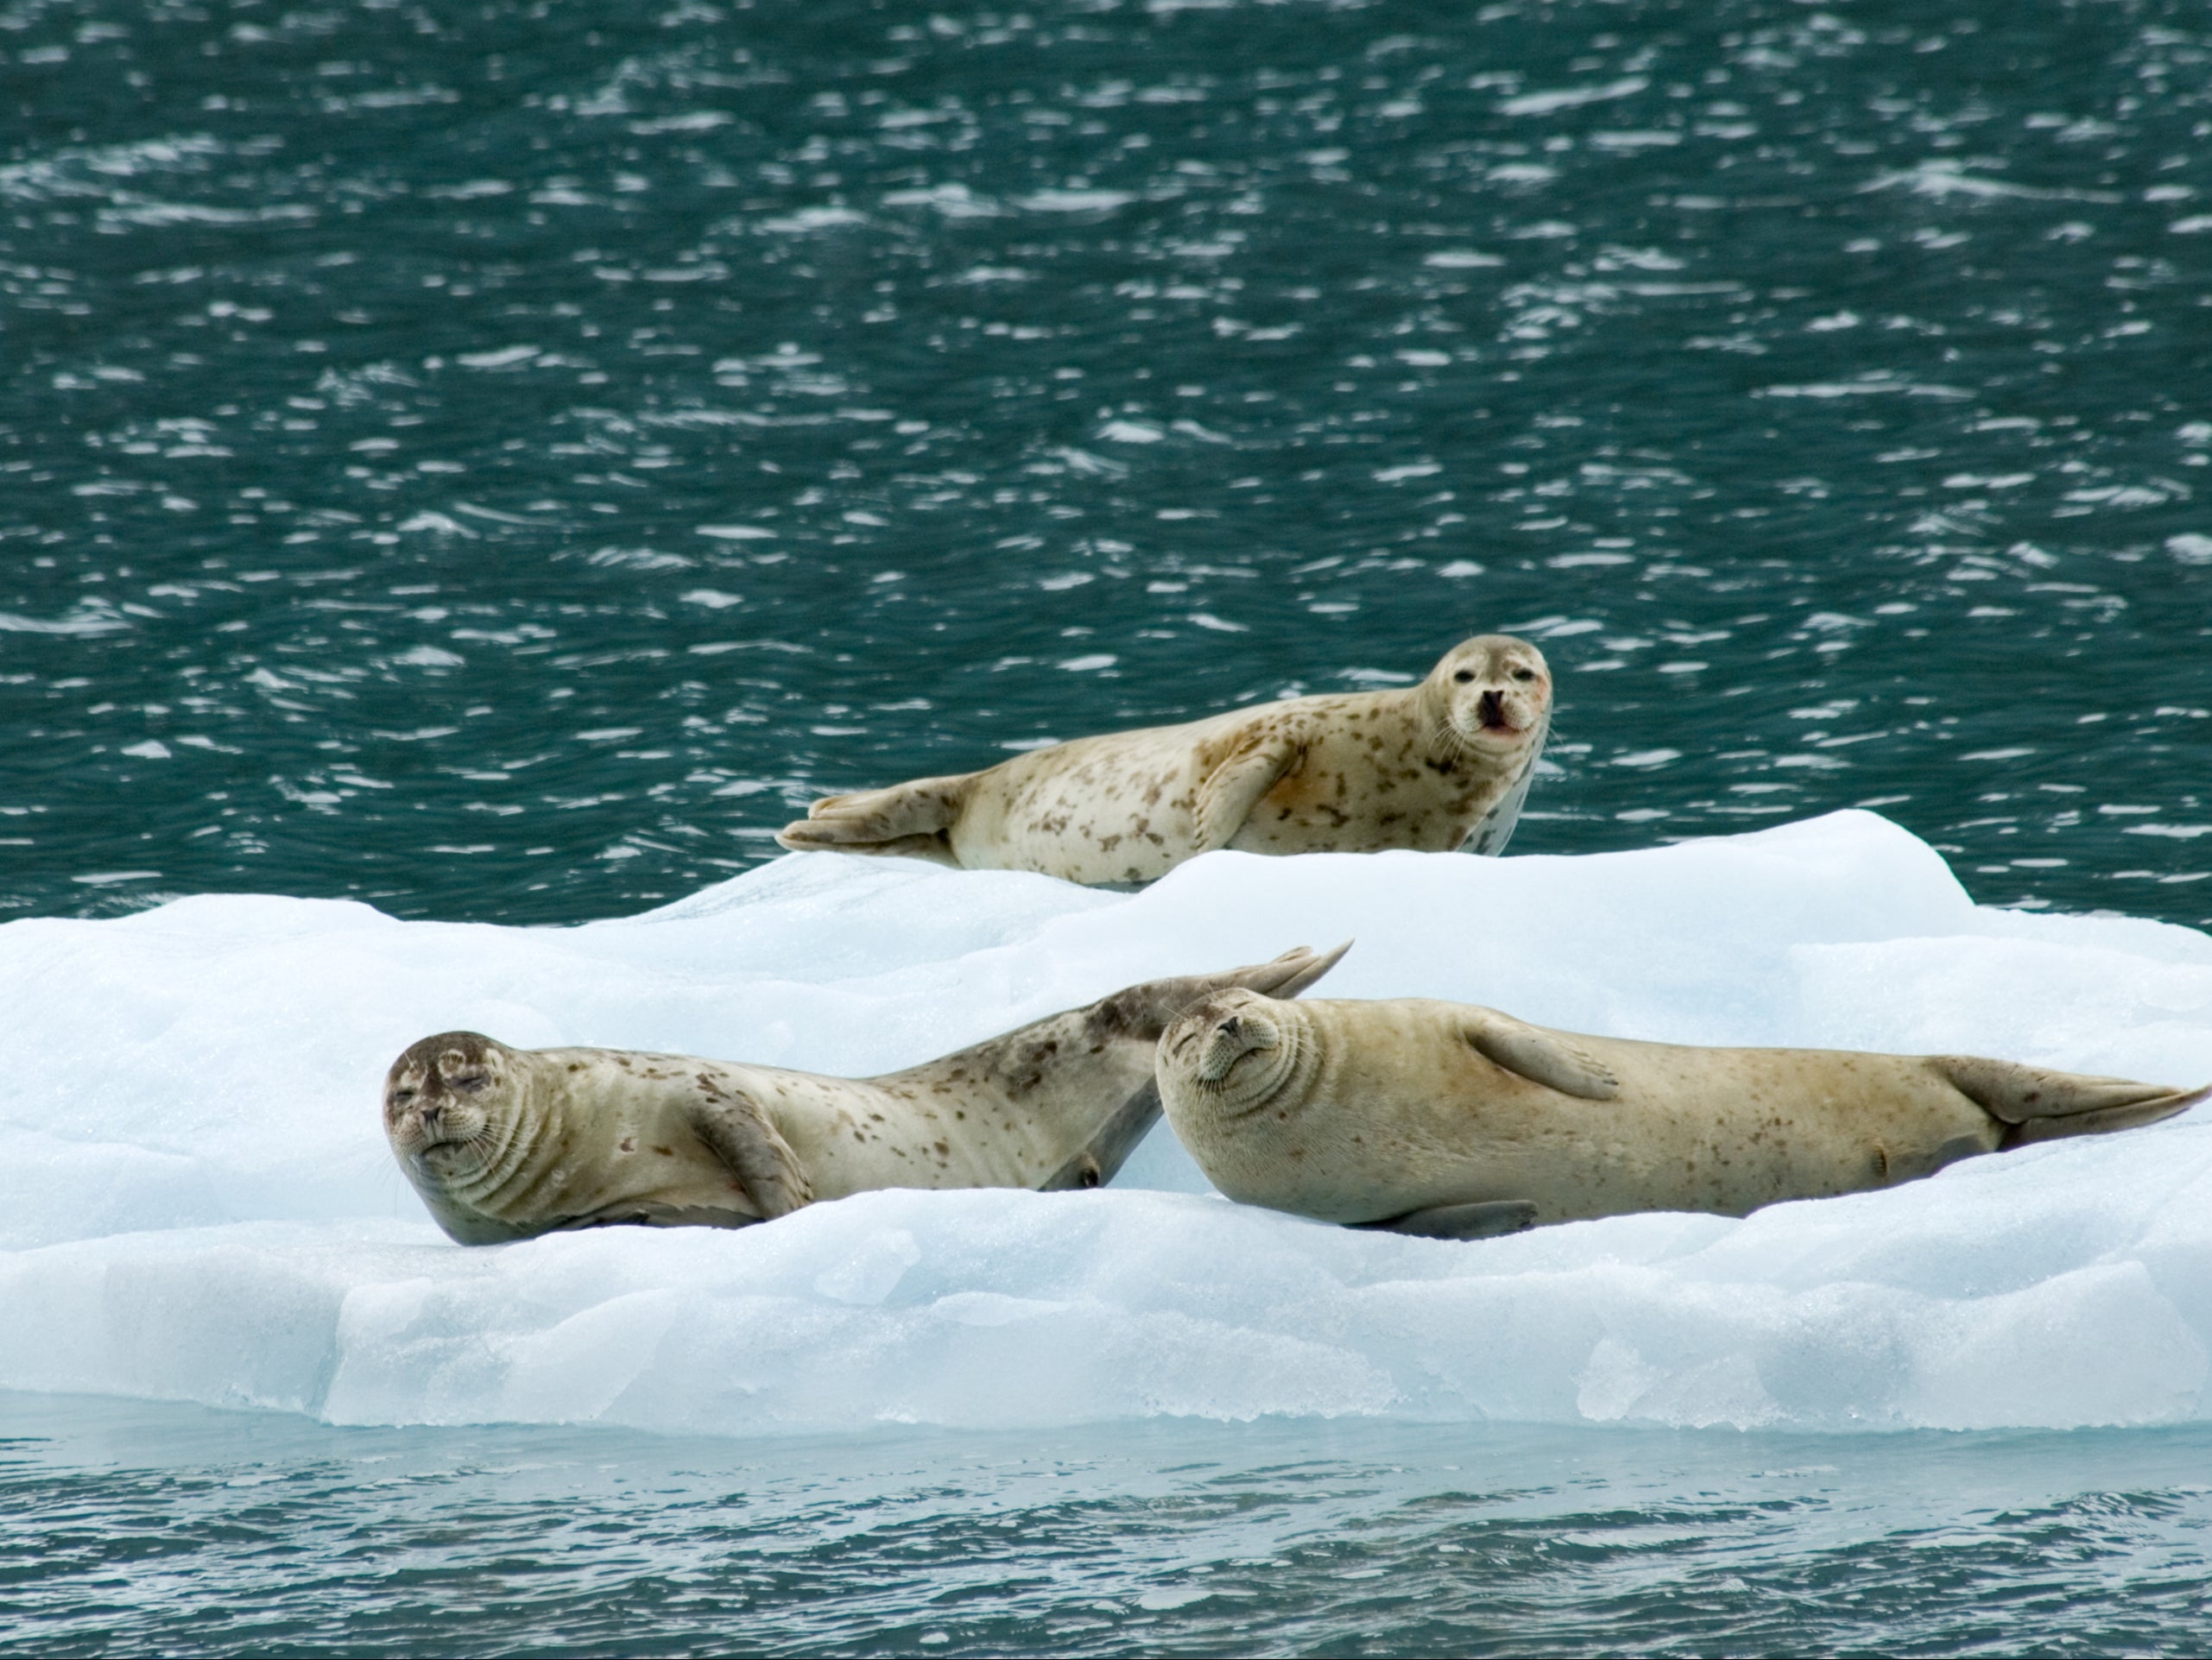 Seals rest on an iceberg in Prince William Sound, Alaska